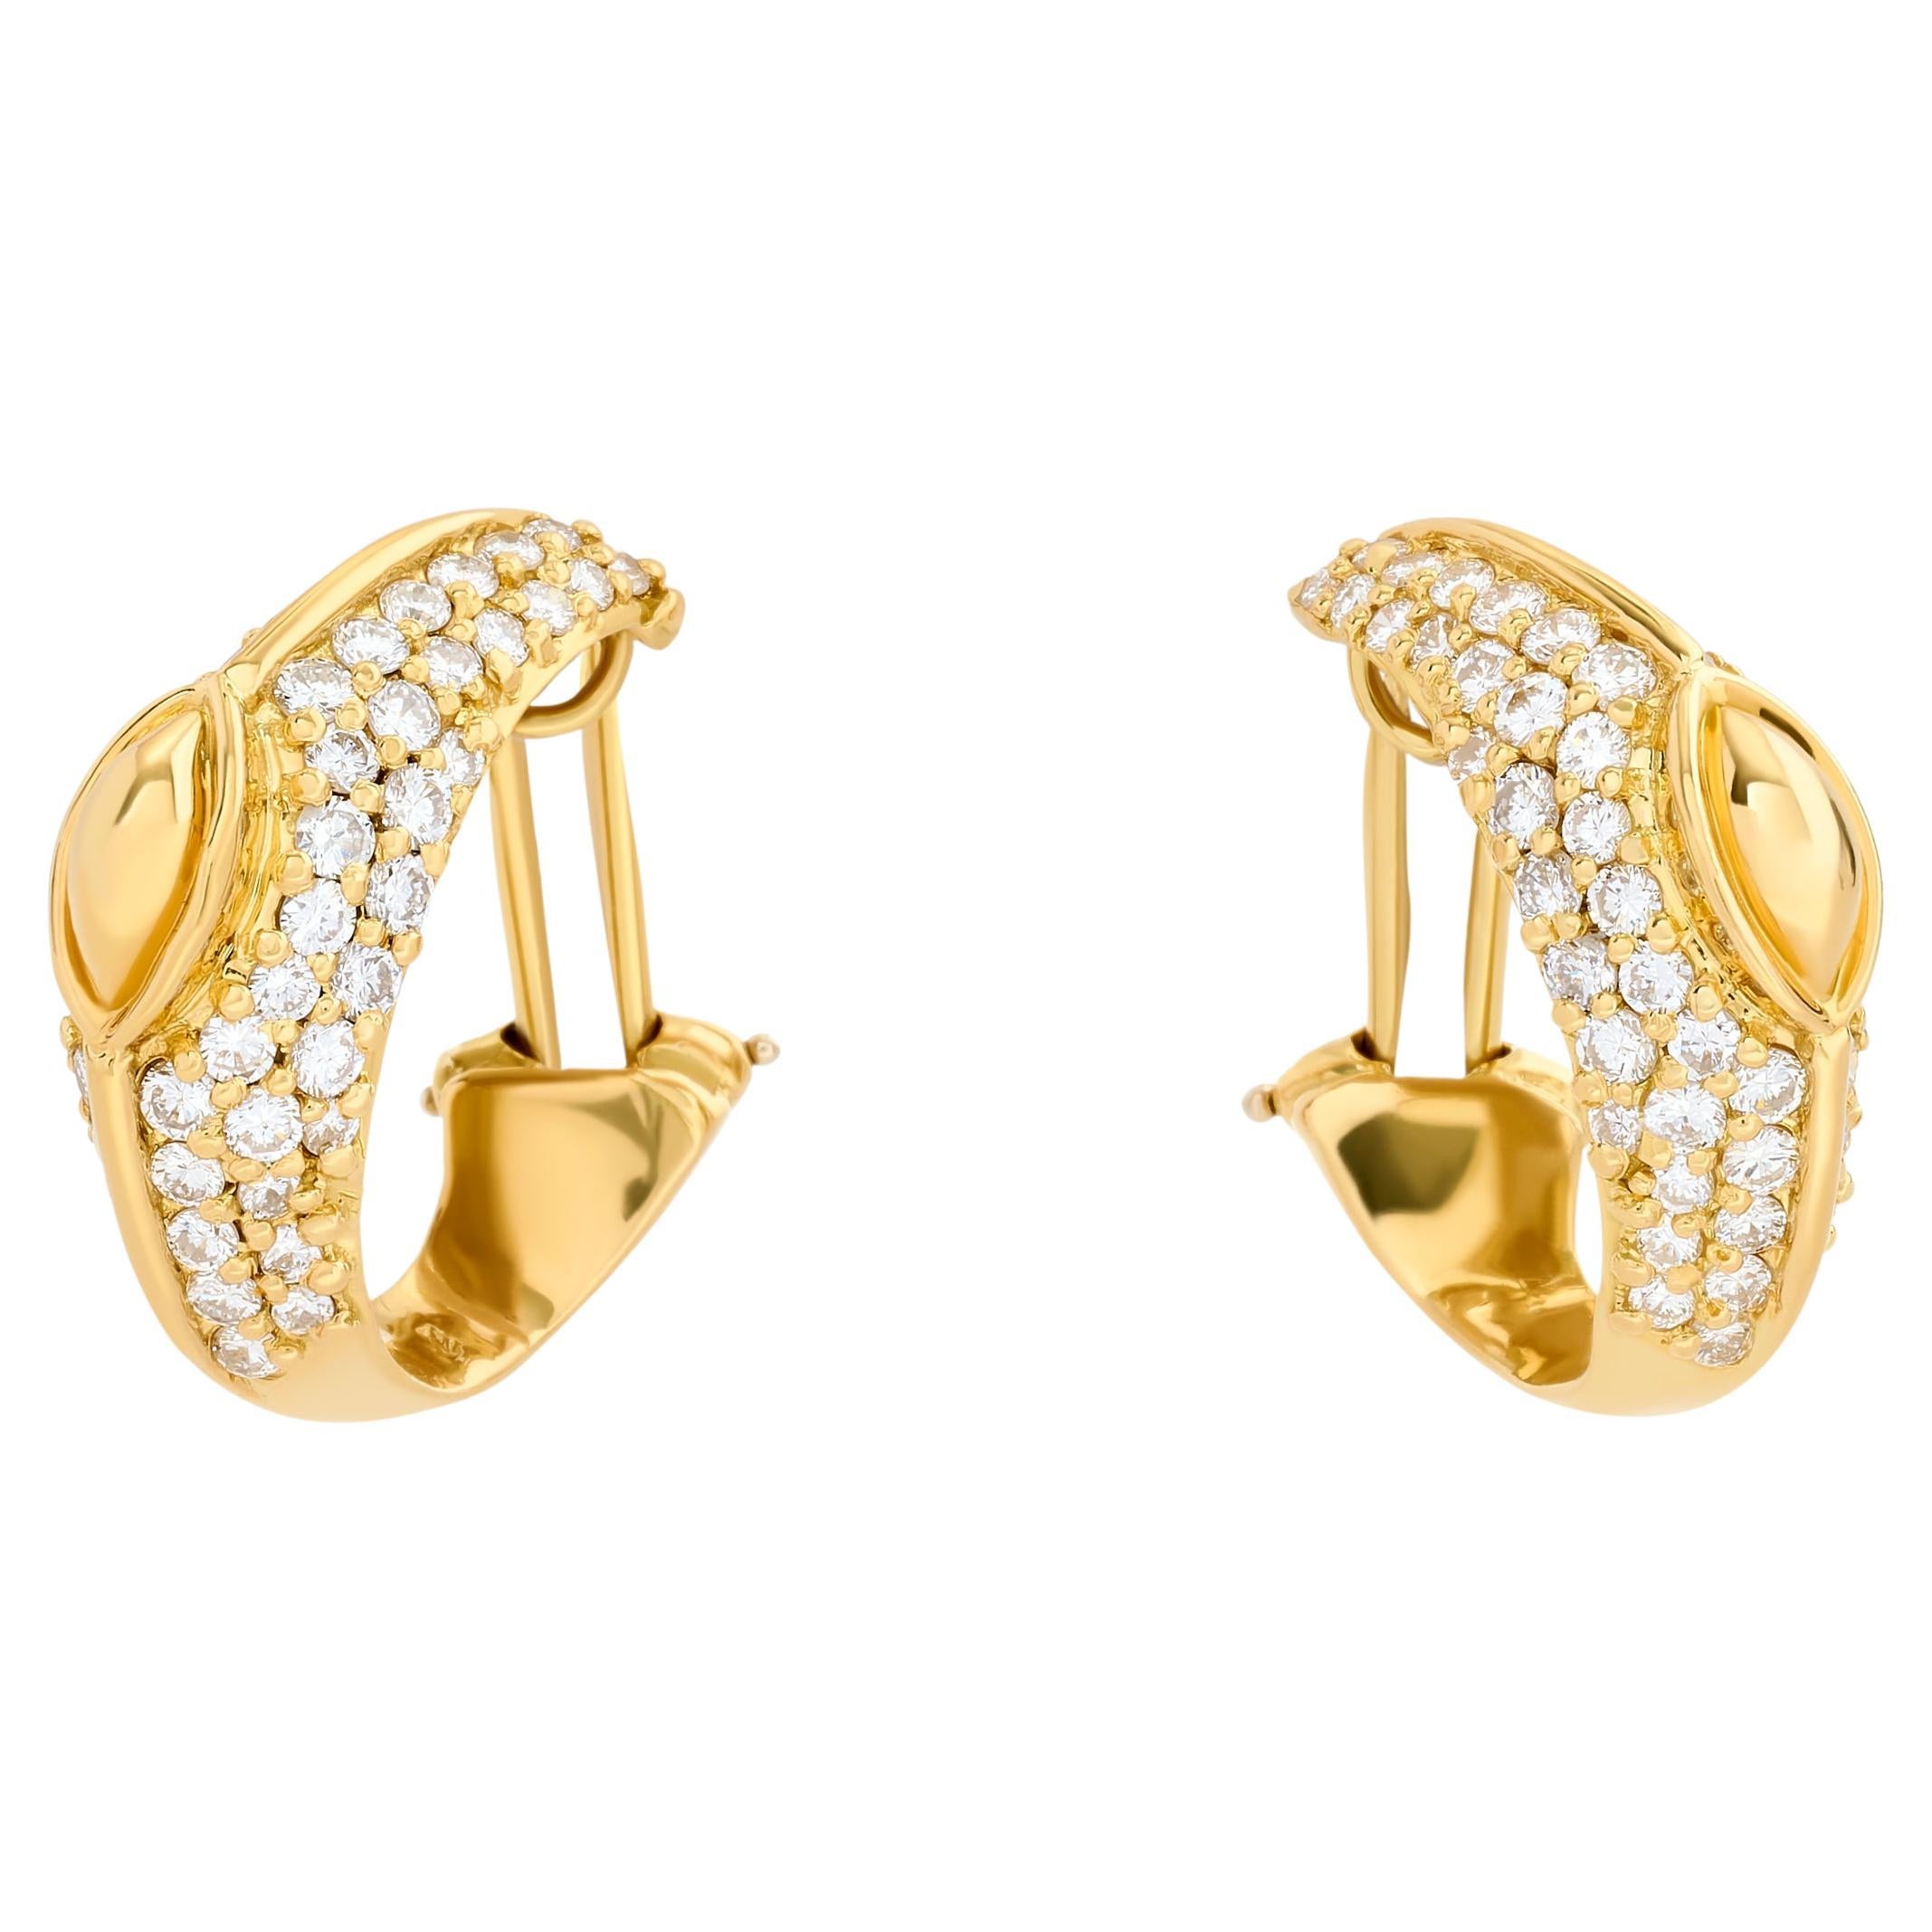 Hammerman Brothers 18K Yellow Gold Diamond Earrings